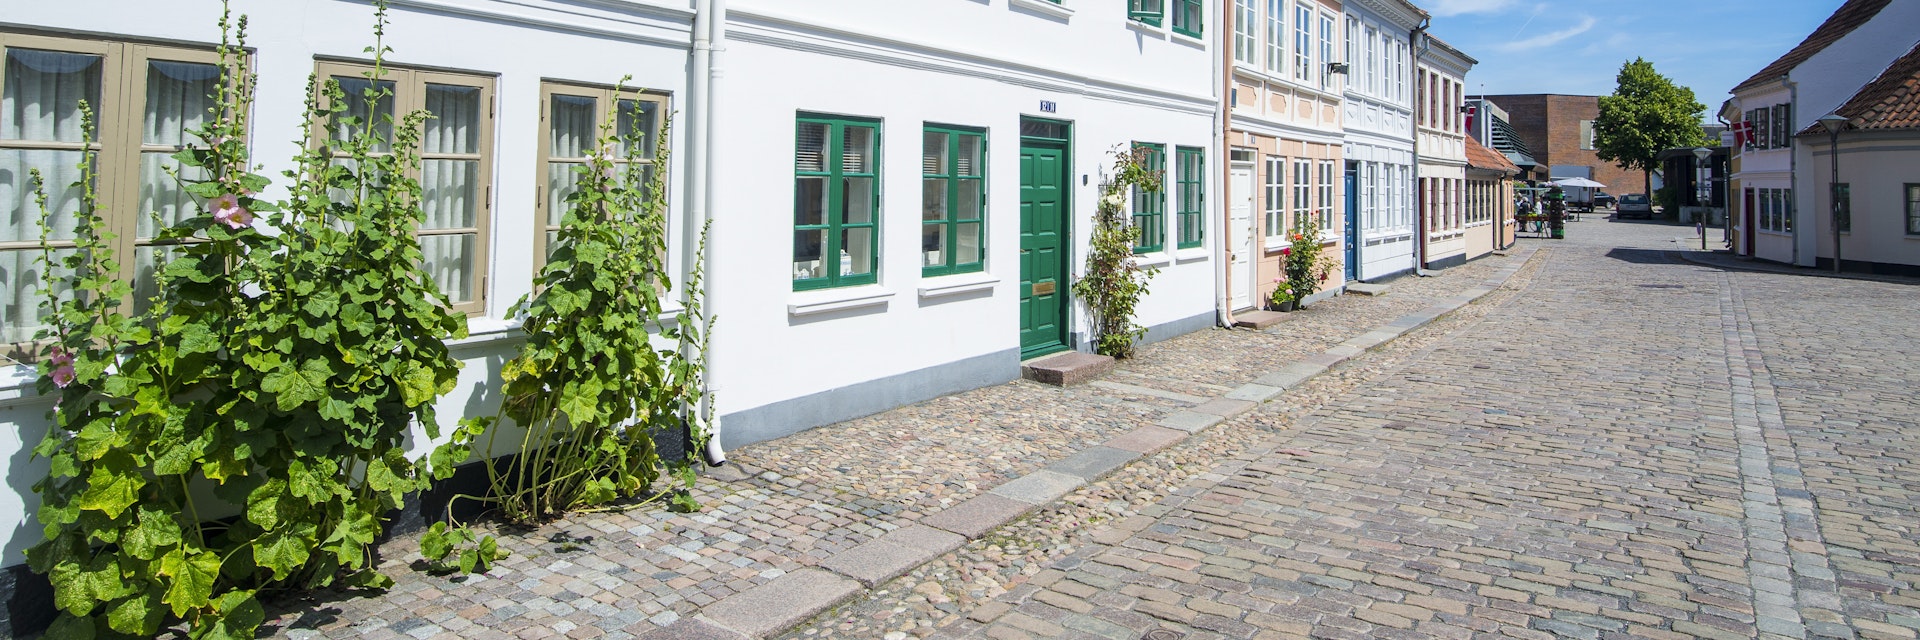 Old precinct of Odense, Funen, Denmark, Scandinavia, Europe